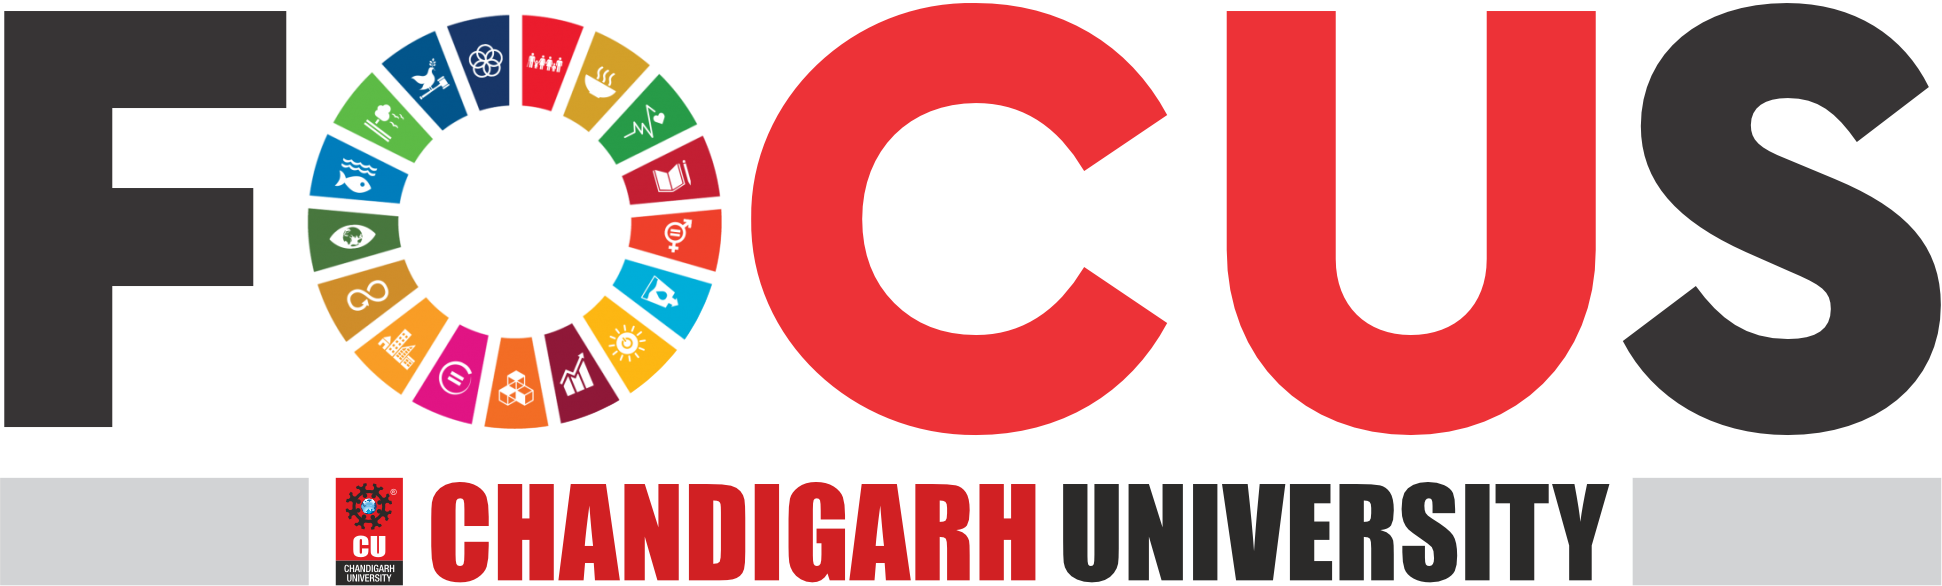 Focus LMS - Chandigarh University